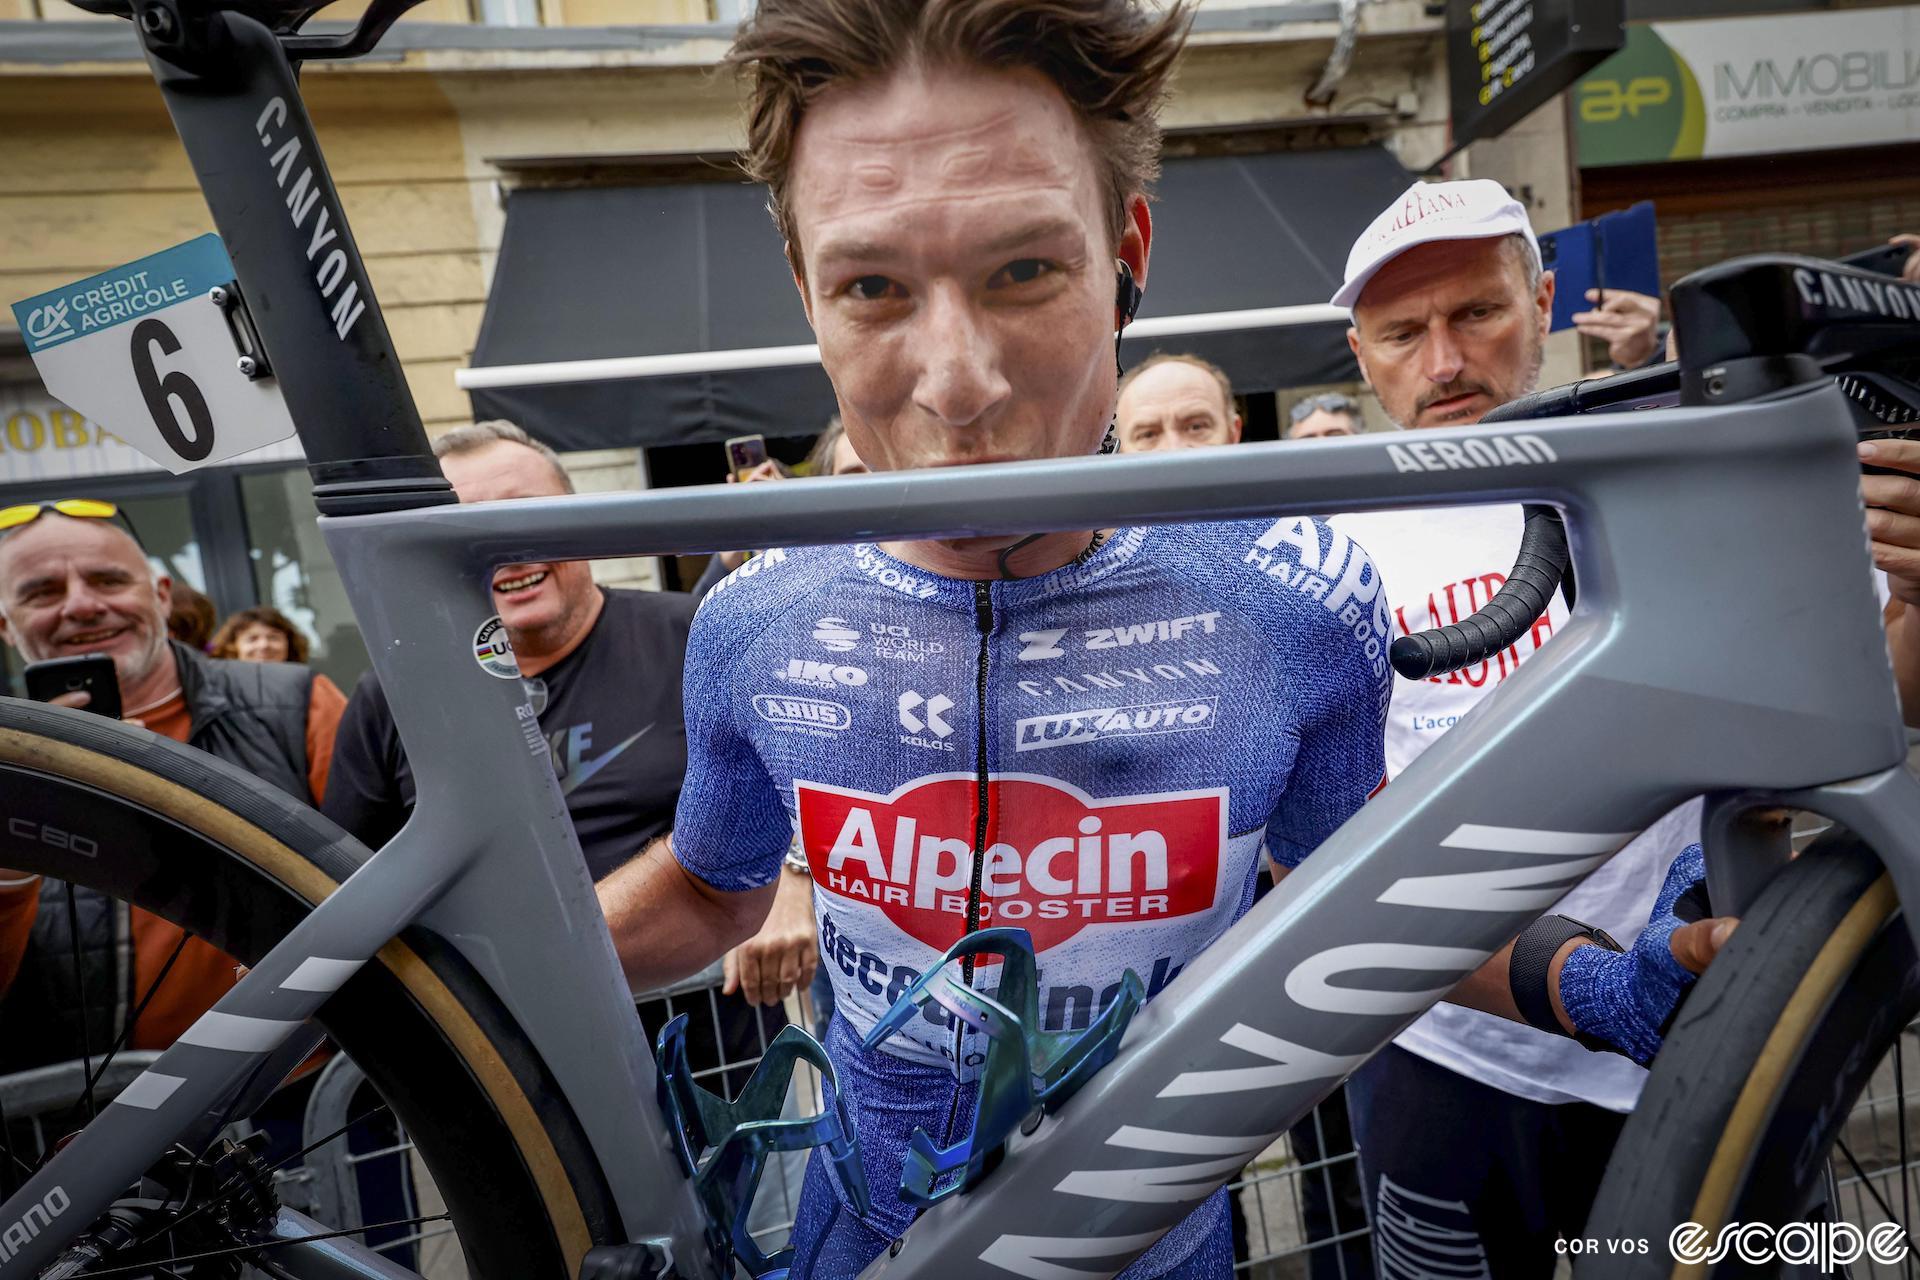 Milan-San Remo winner Jasper Philipsen kisses the top tube of his Canyon Aeroad bike after the win.